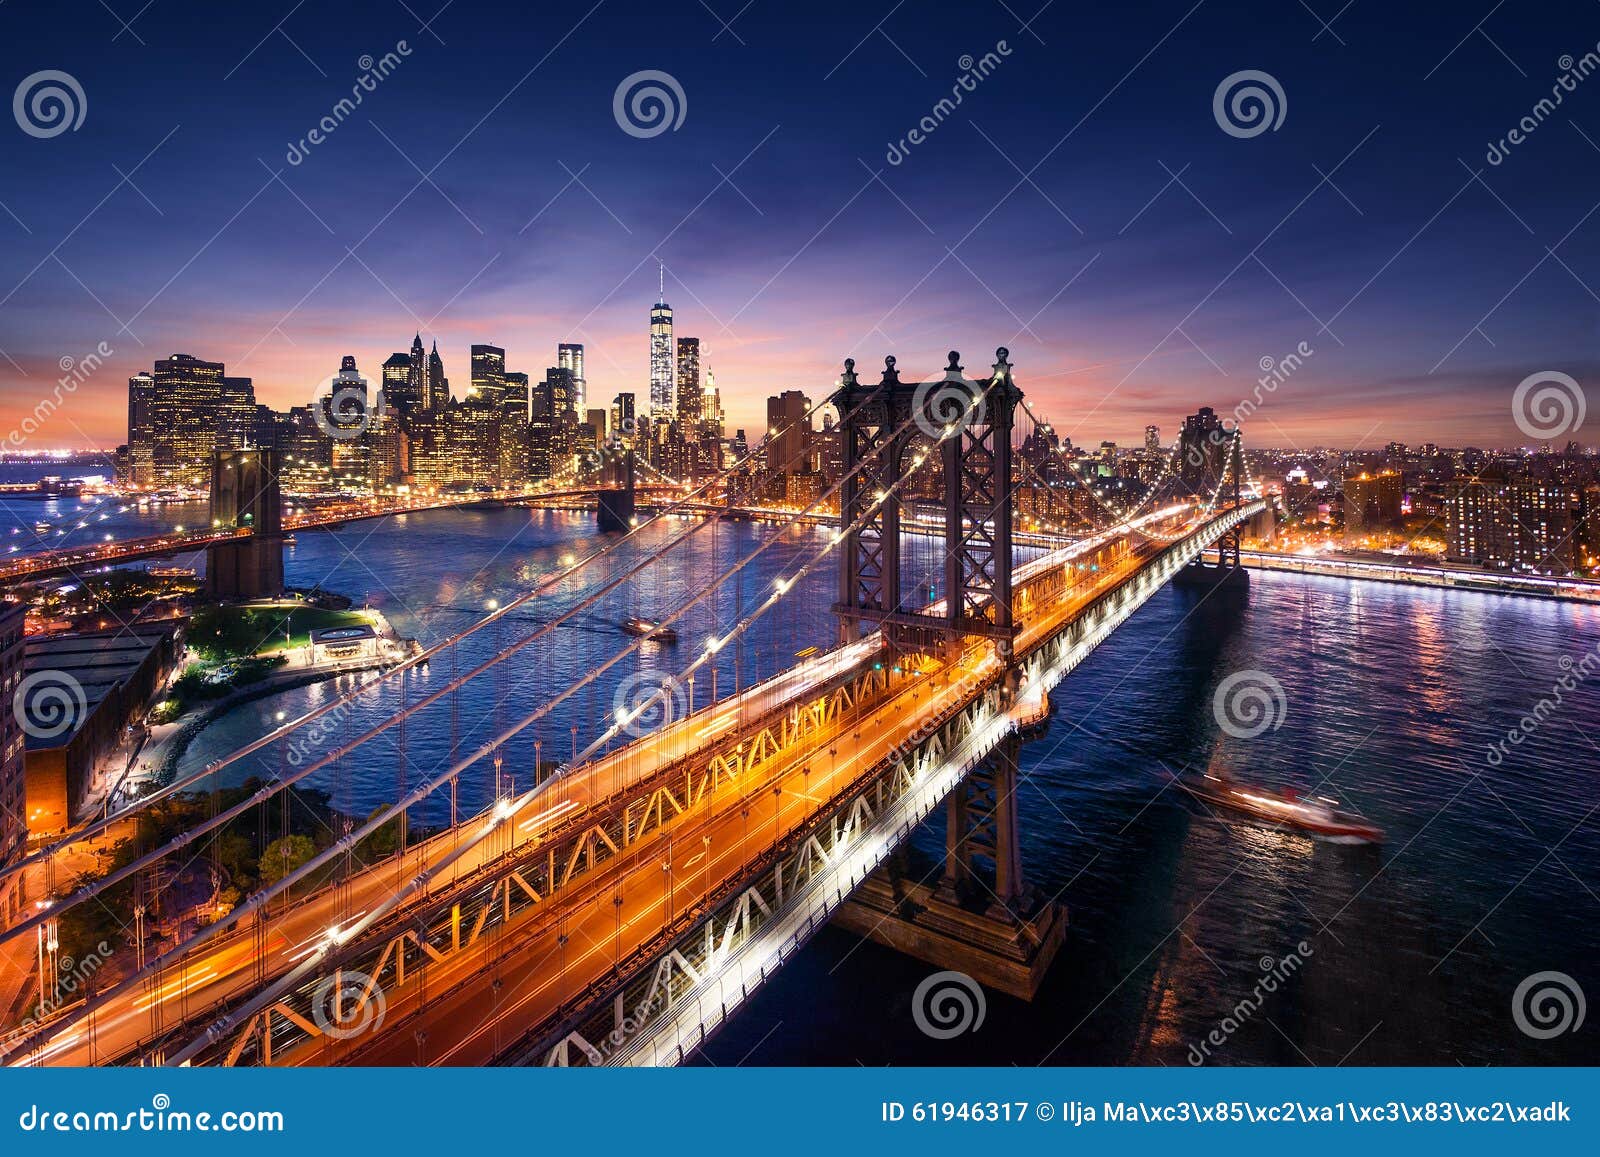 new york city - beautiful sunset over manhattan with manhattan and brooklyn bridge